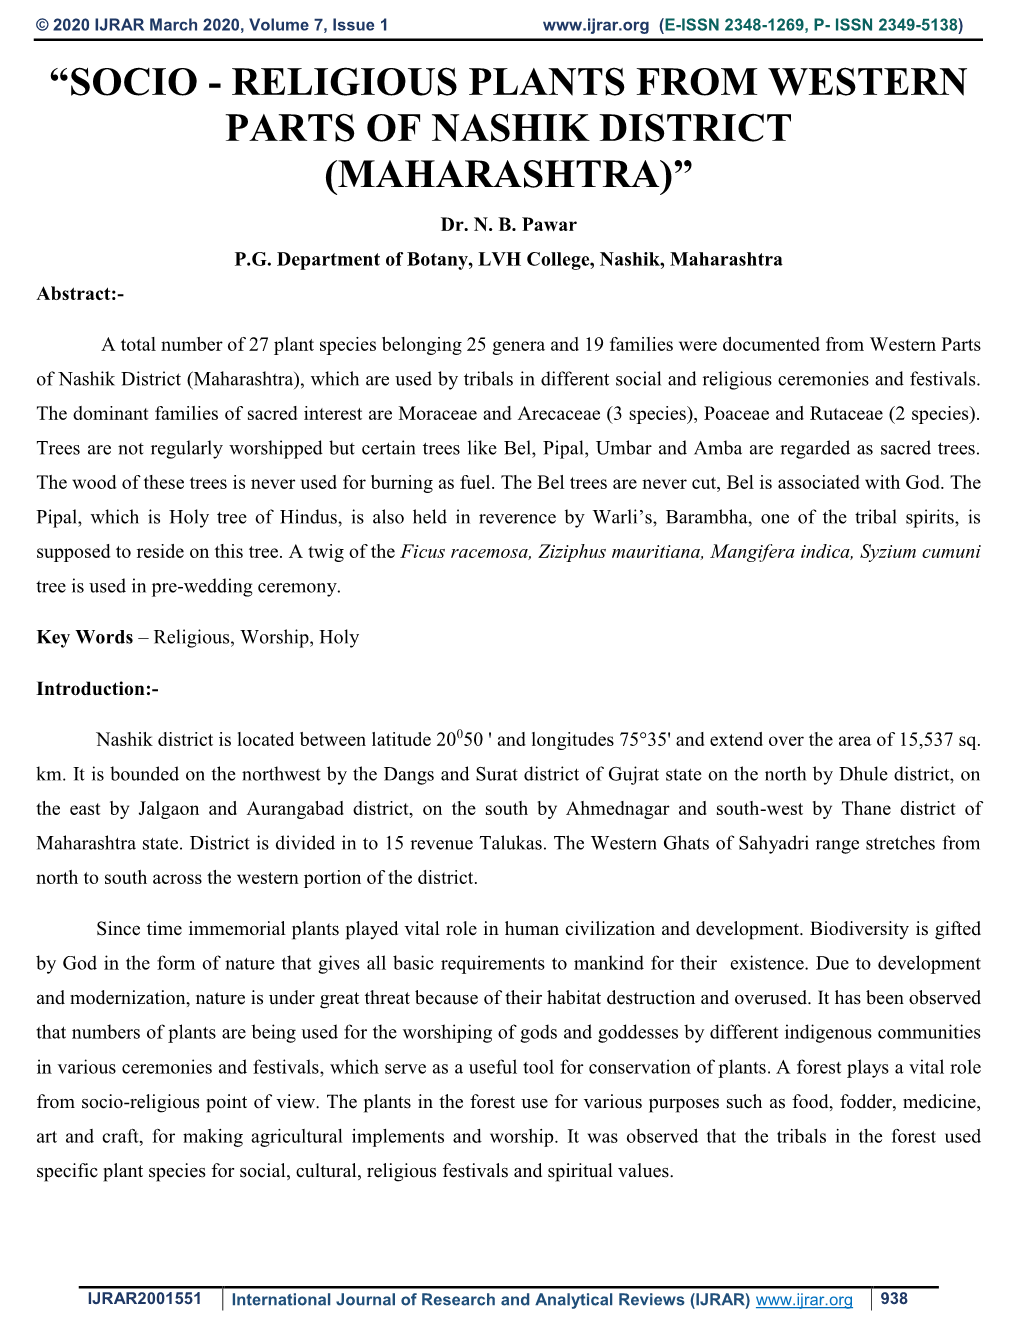 SOCIO - RELIGIOUS PLANTS from WESTERN PARTS of NASHIK DISTRICT (MAHARASHTRA)” Dr